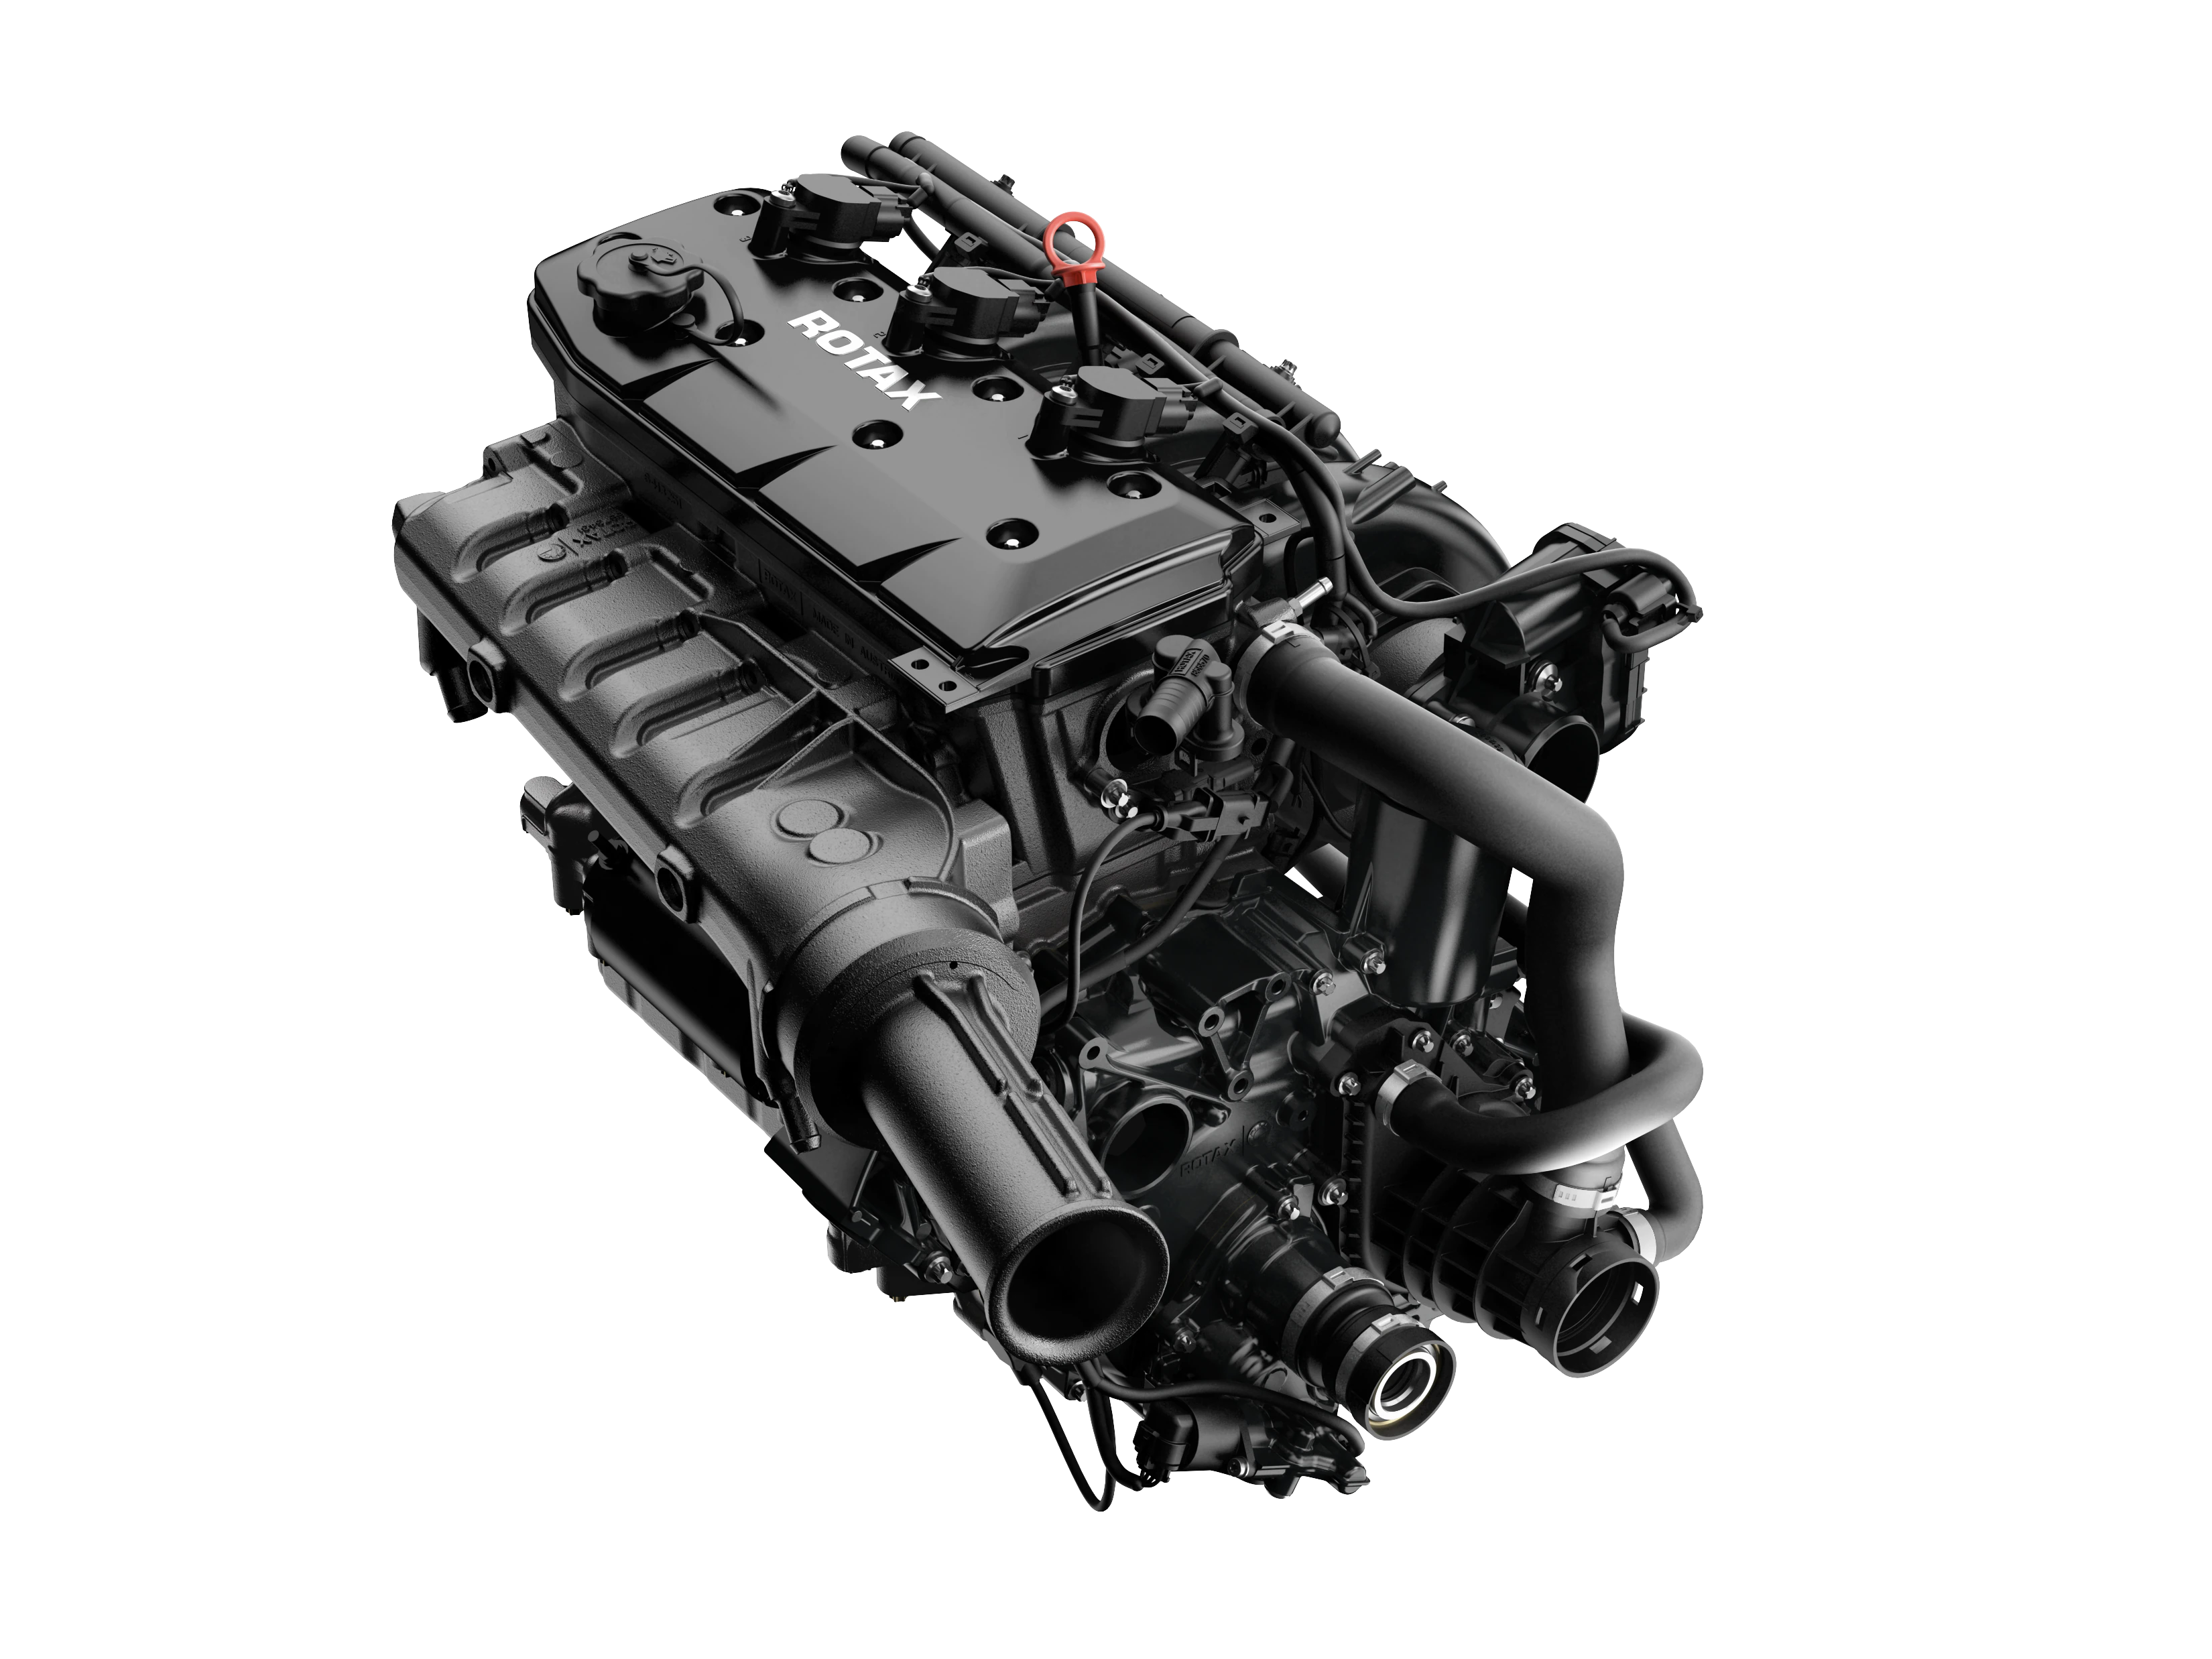 Rotax 1630 ACE - 130 HP motor